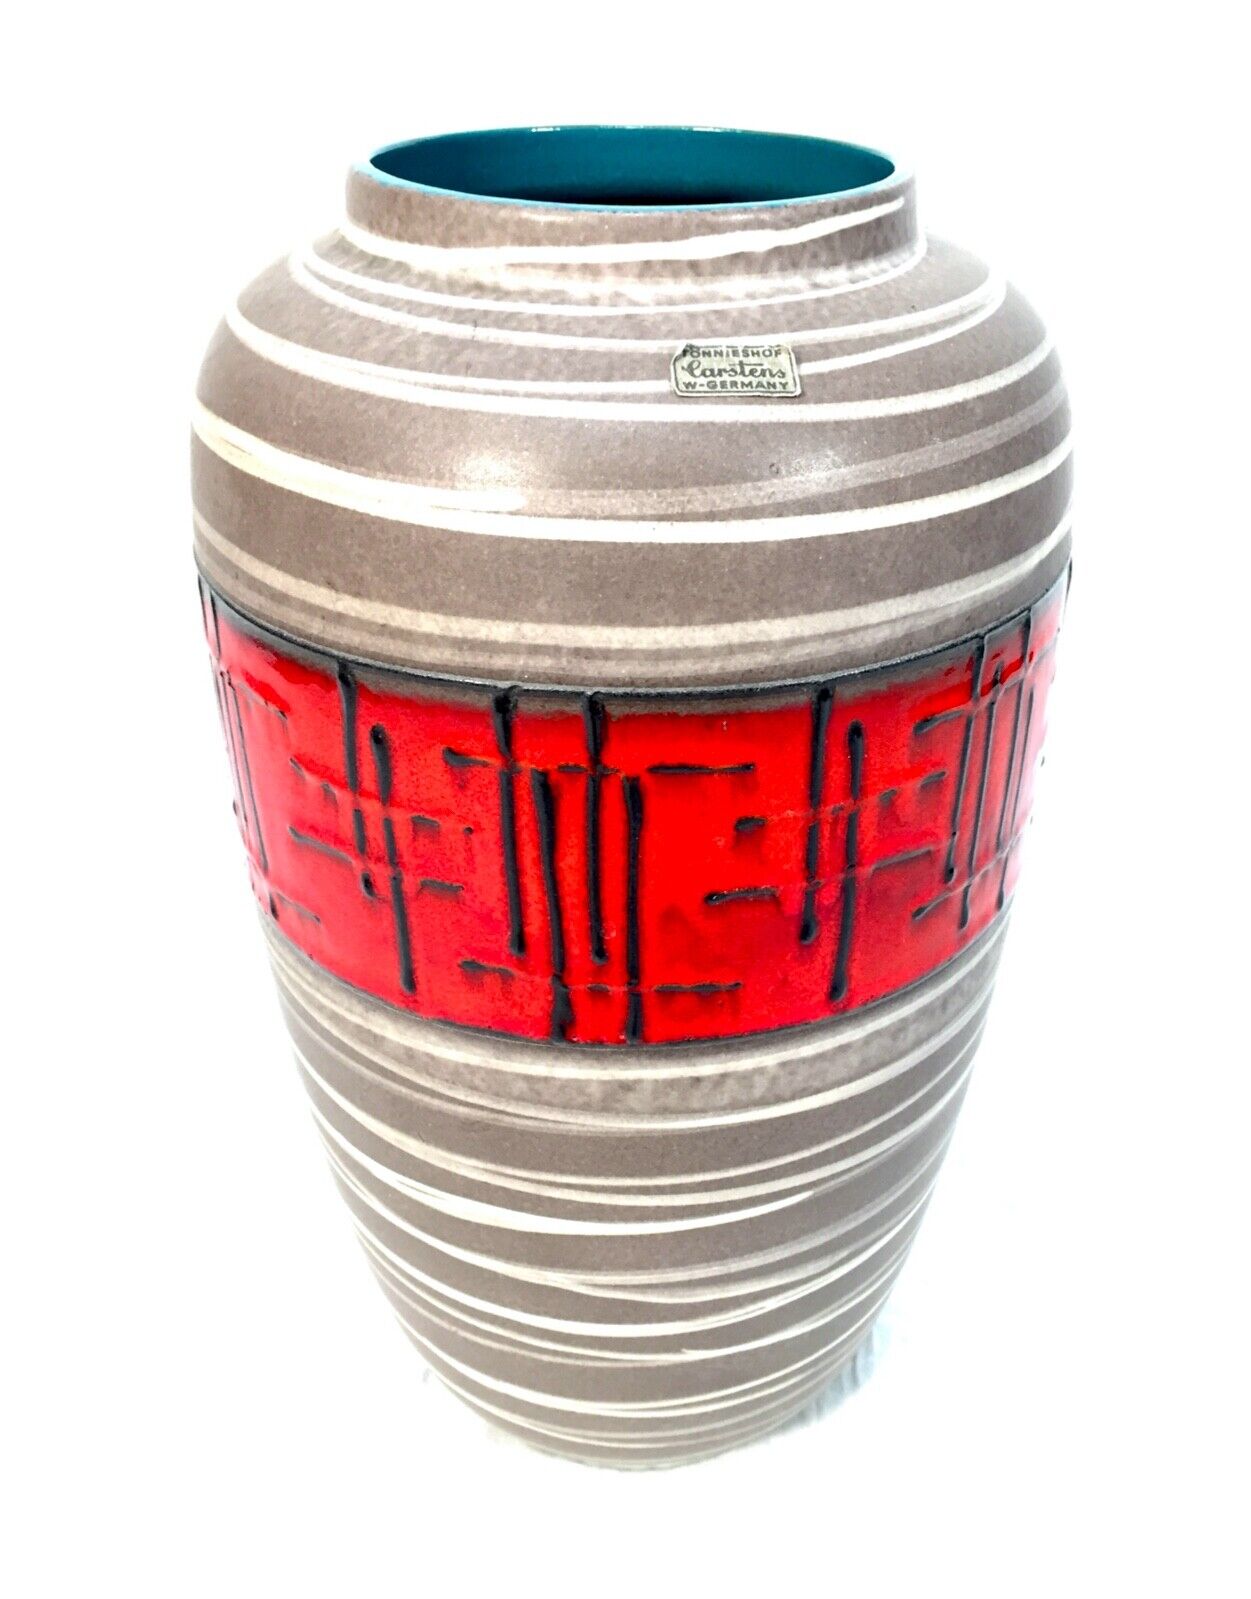 Vintage West German Pottery Large Vase / Jug / Red & Grey / 1970s Retro